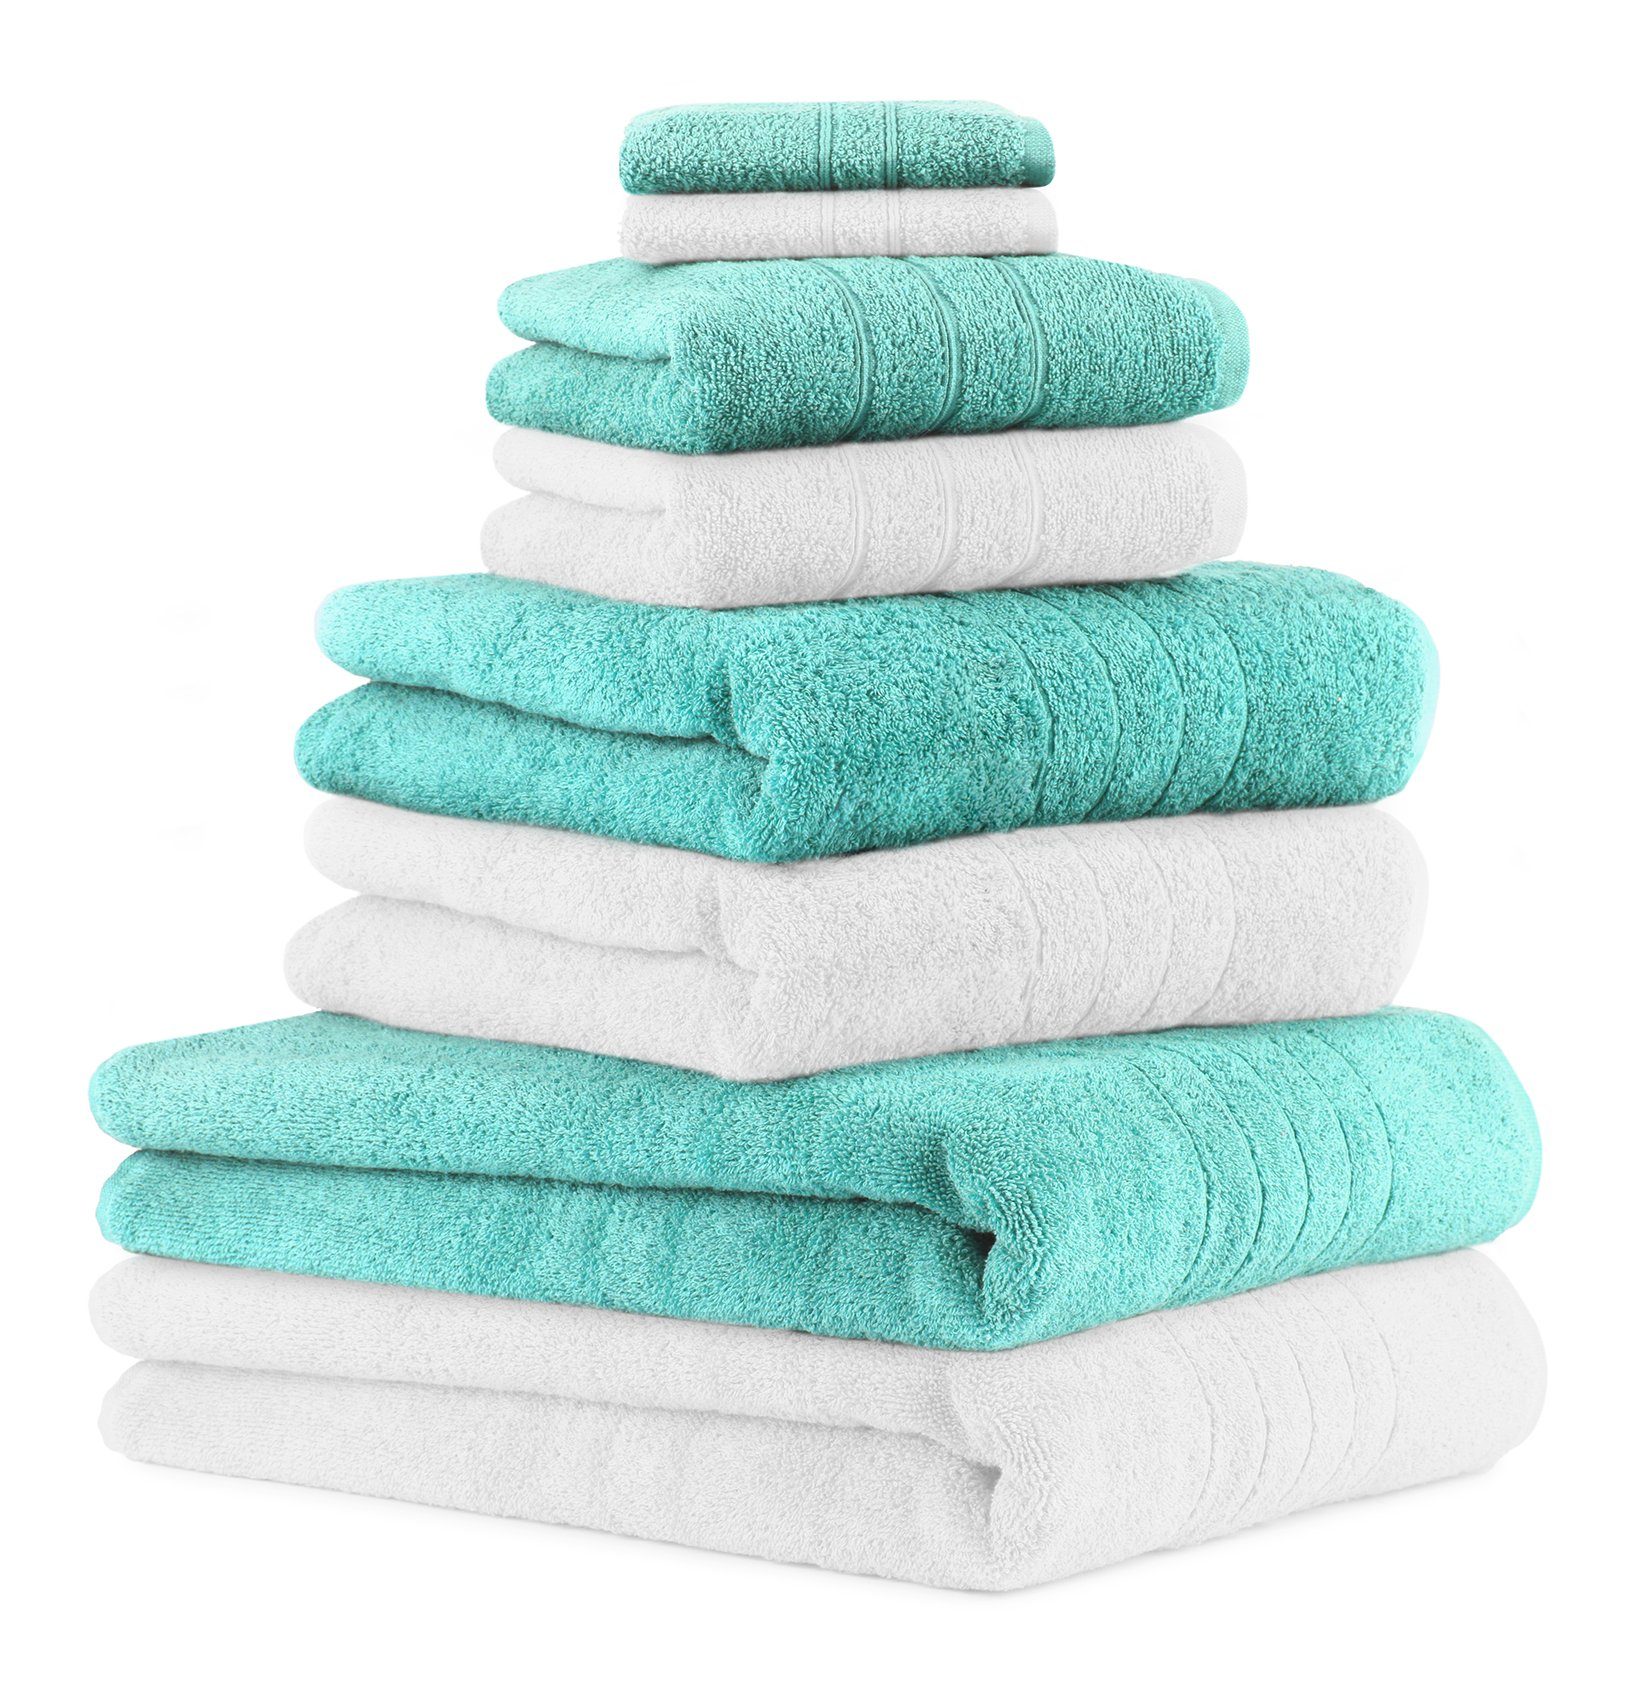 Duschtücher Handtuch-Set weiß Seiftücher Handtücher 100% 8-TLG. 100% (8-tlg) 2 2 Handtuch Deluxe Baumwolle, 2 2 Farbe Betz türkis, Baumwolle und Badetücher Set